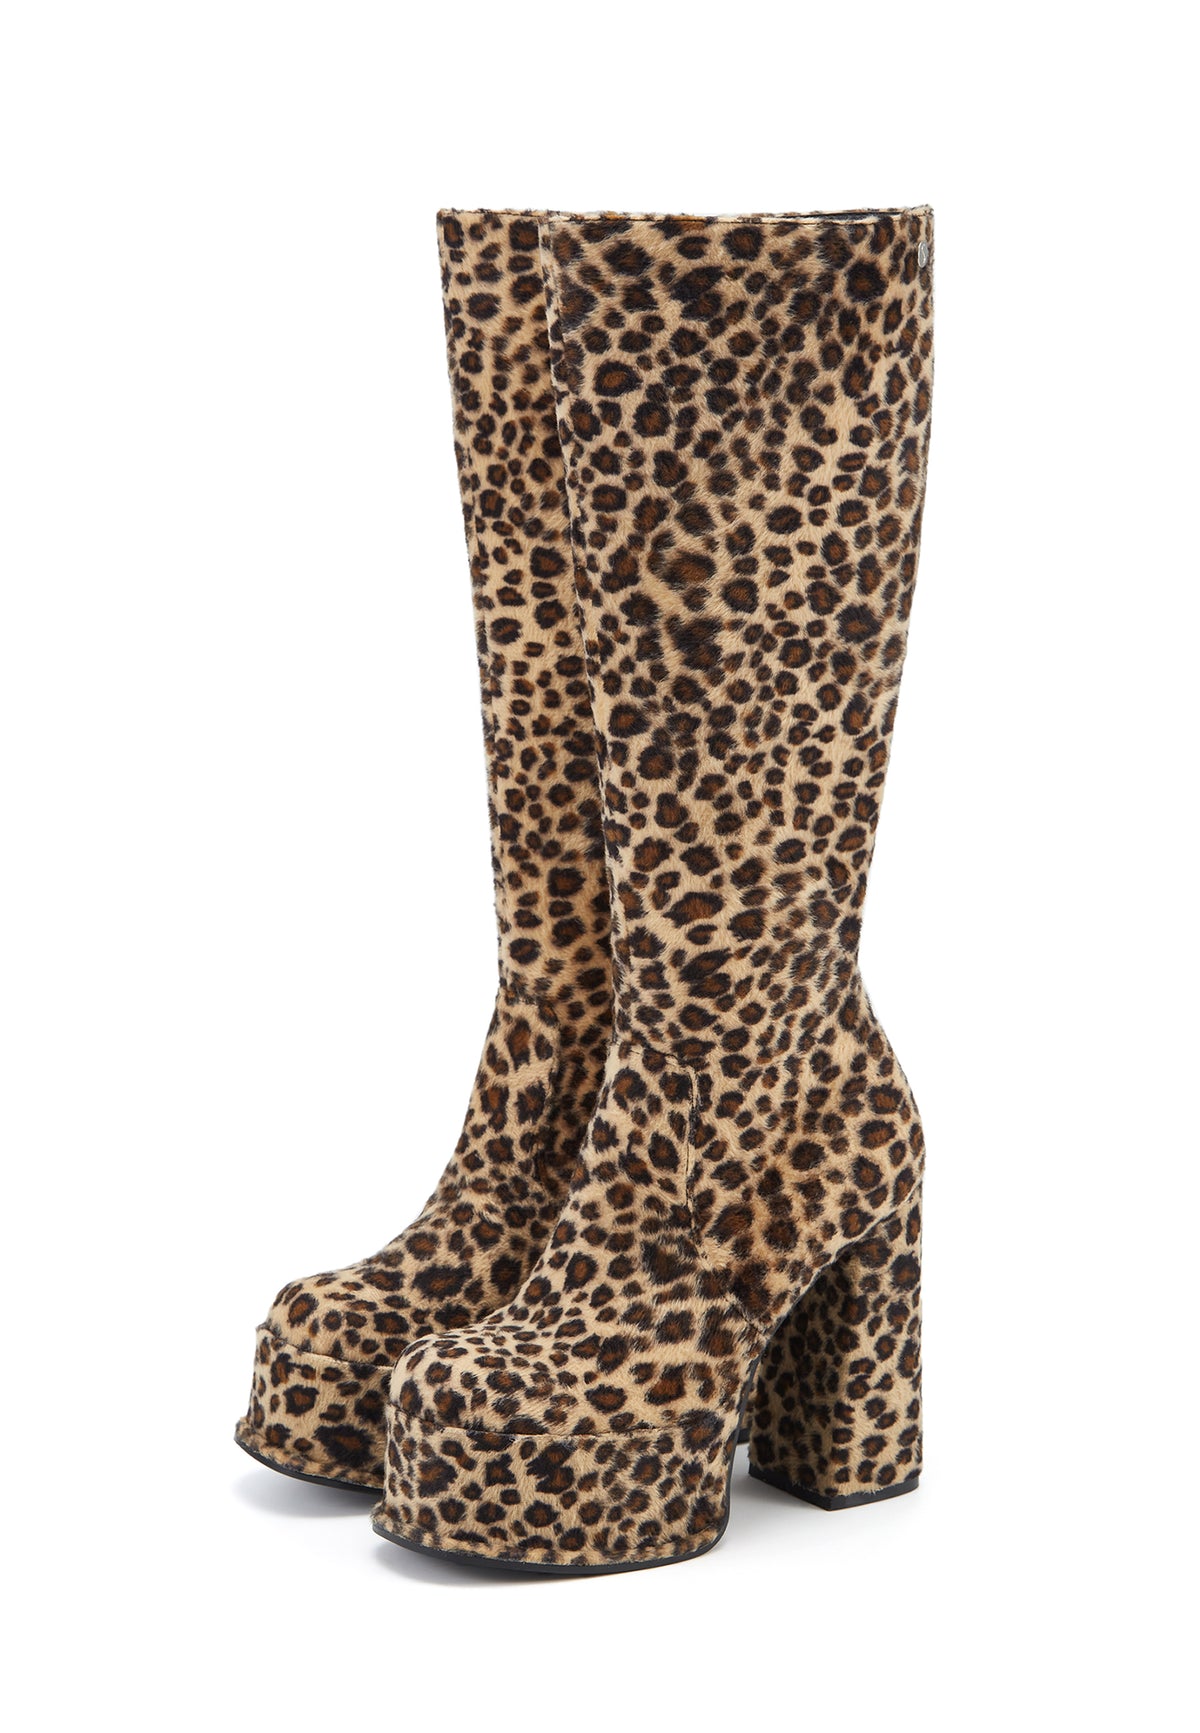 Kia Leopard Print Platform Knee High Boot